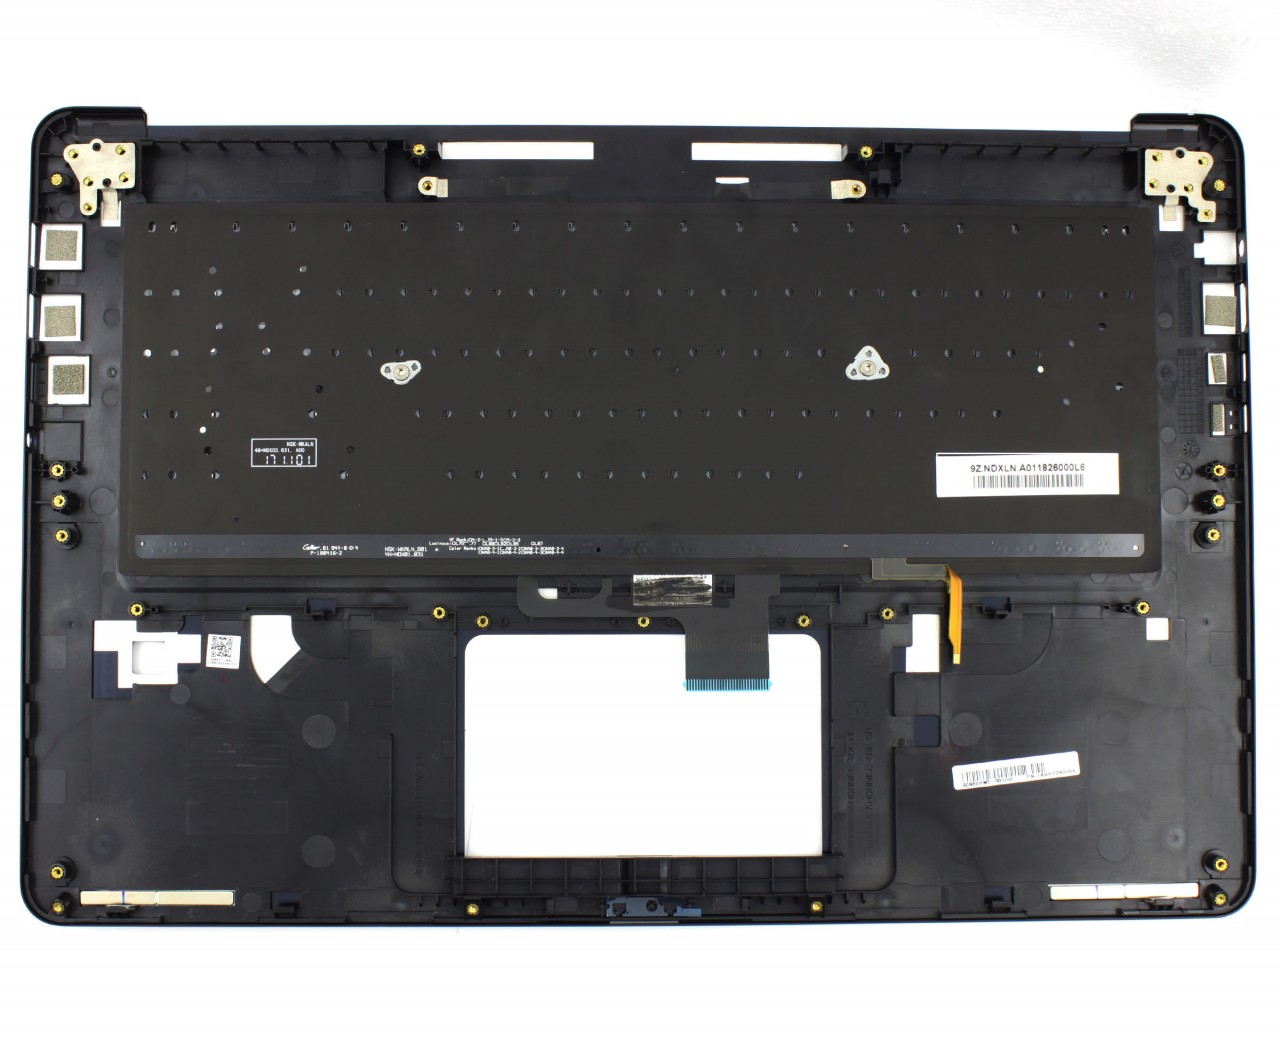 Tastatura Asus Zenbook Pro UX550GE Neagra cu Palmrest Albastru Inchis iluminata backlit image9